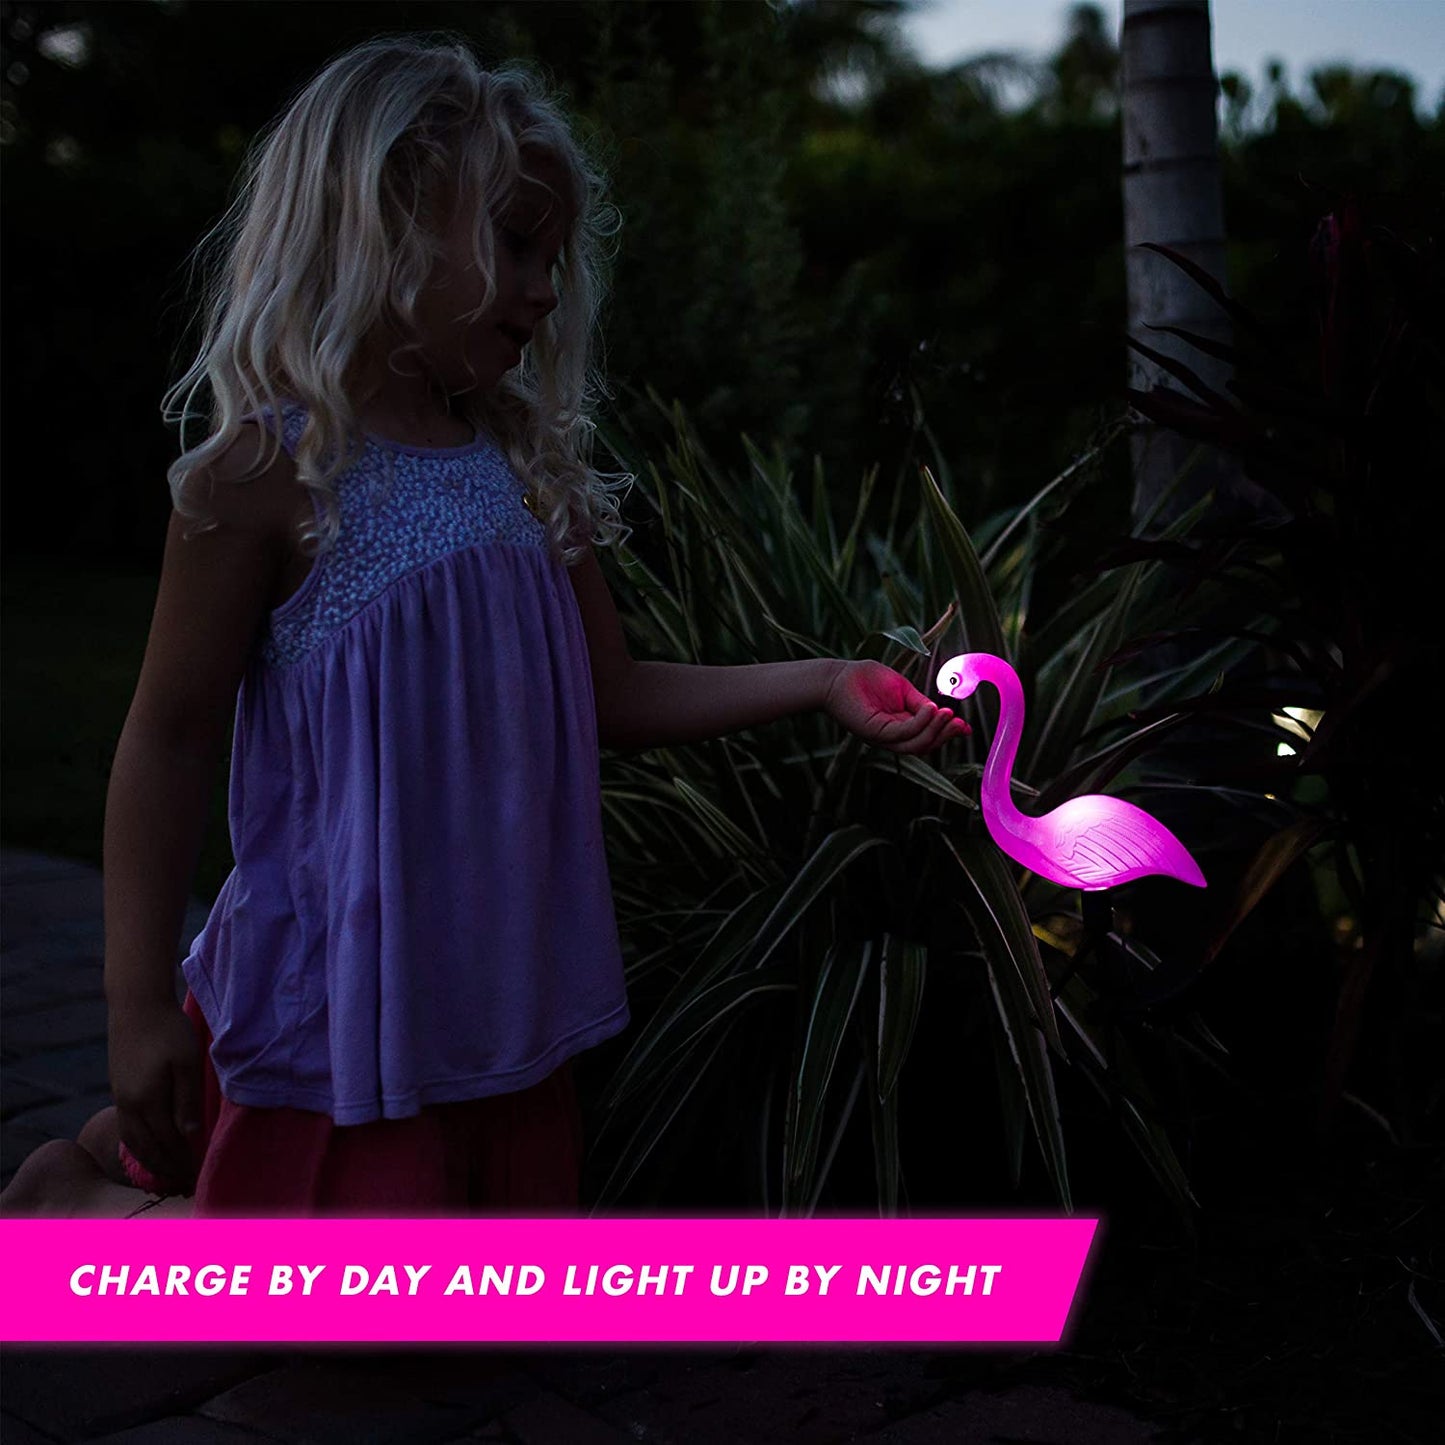 Flamingo Lawn Solar Lamp, flamingo stake Yard Waterproof light.